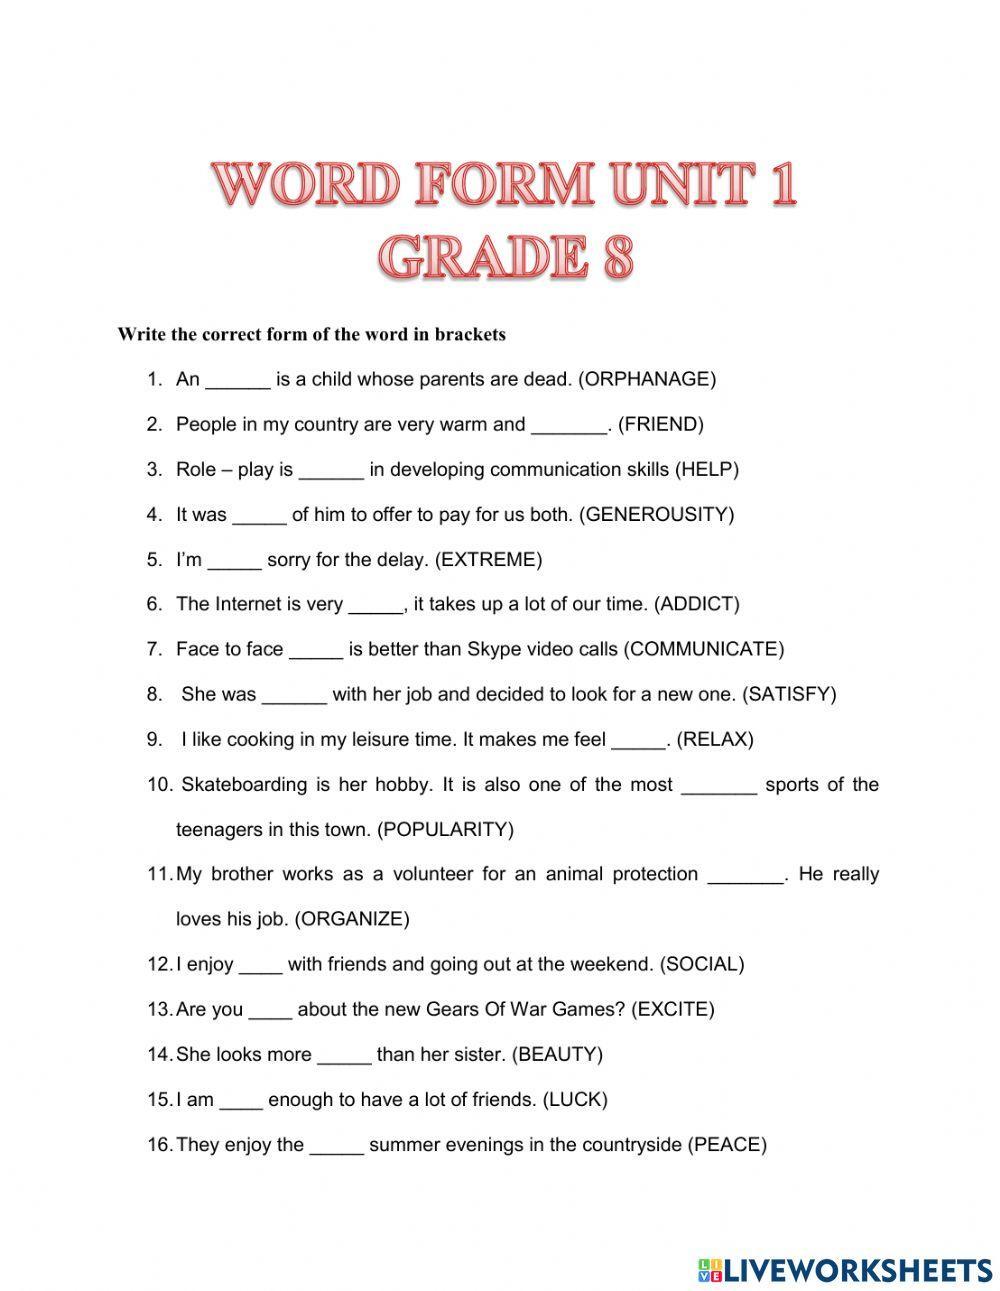 Grade 8 - Unit 1 - Word Form